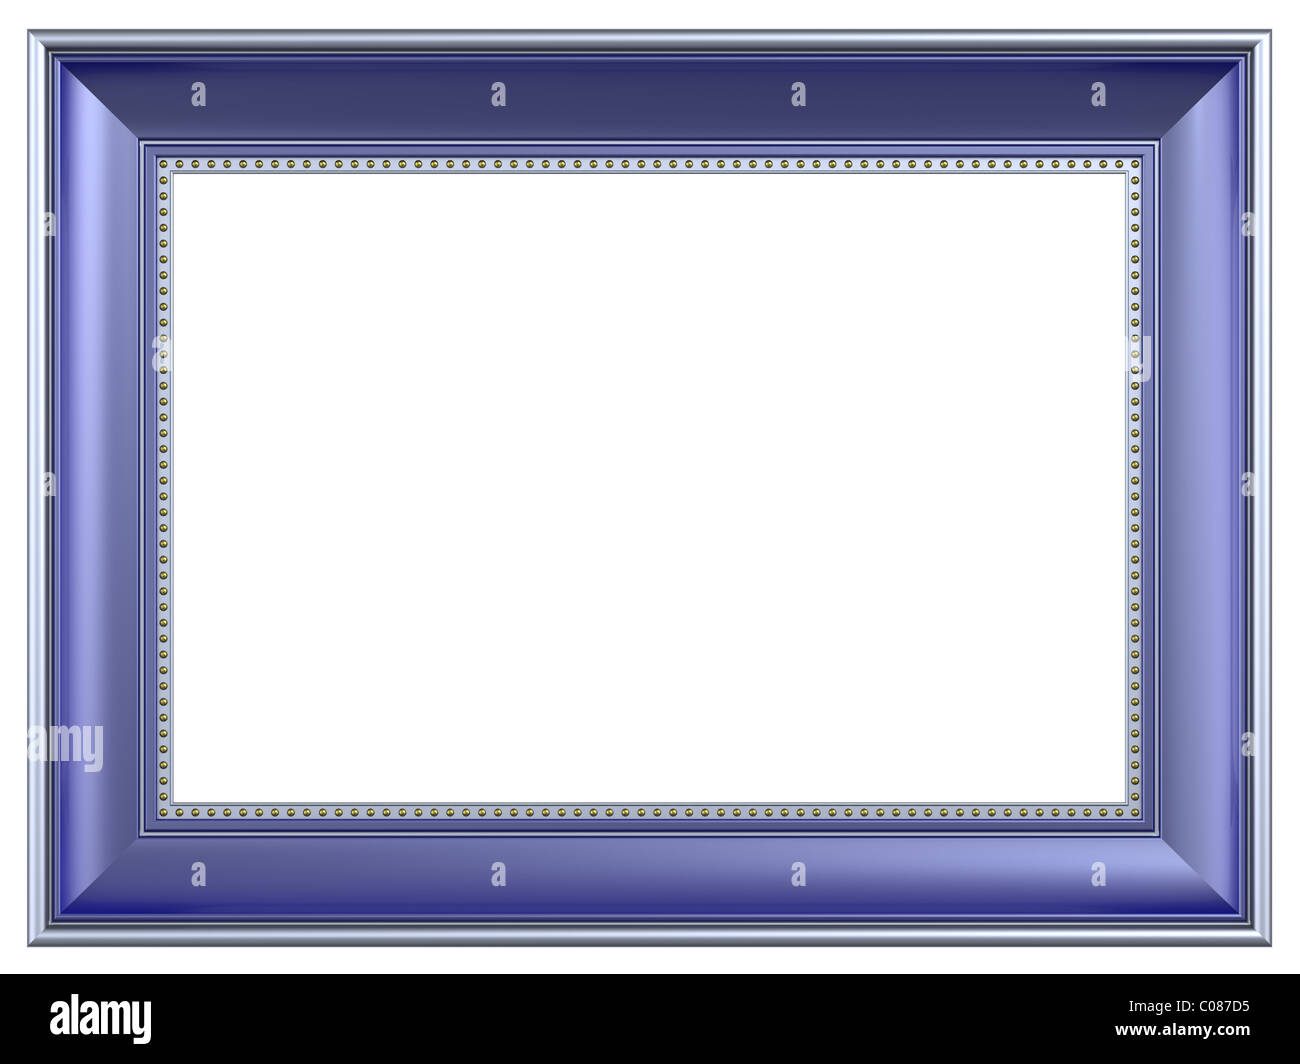 Marco fotos Finsbury, rectangular, formato vertical u horizontal, tamaño: 45 x 32,7 x 2 cm, para fotos DIN A3 de 41 x 28,7 cm